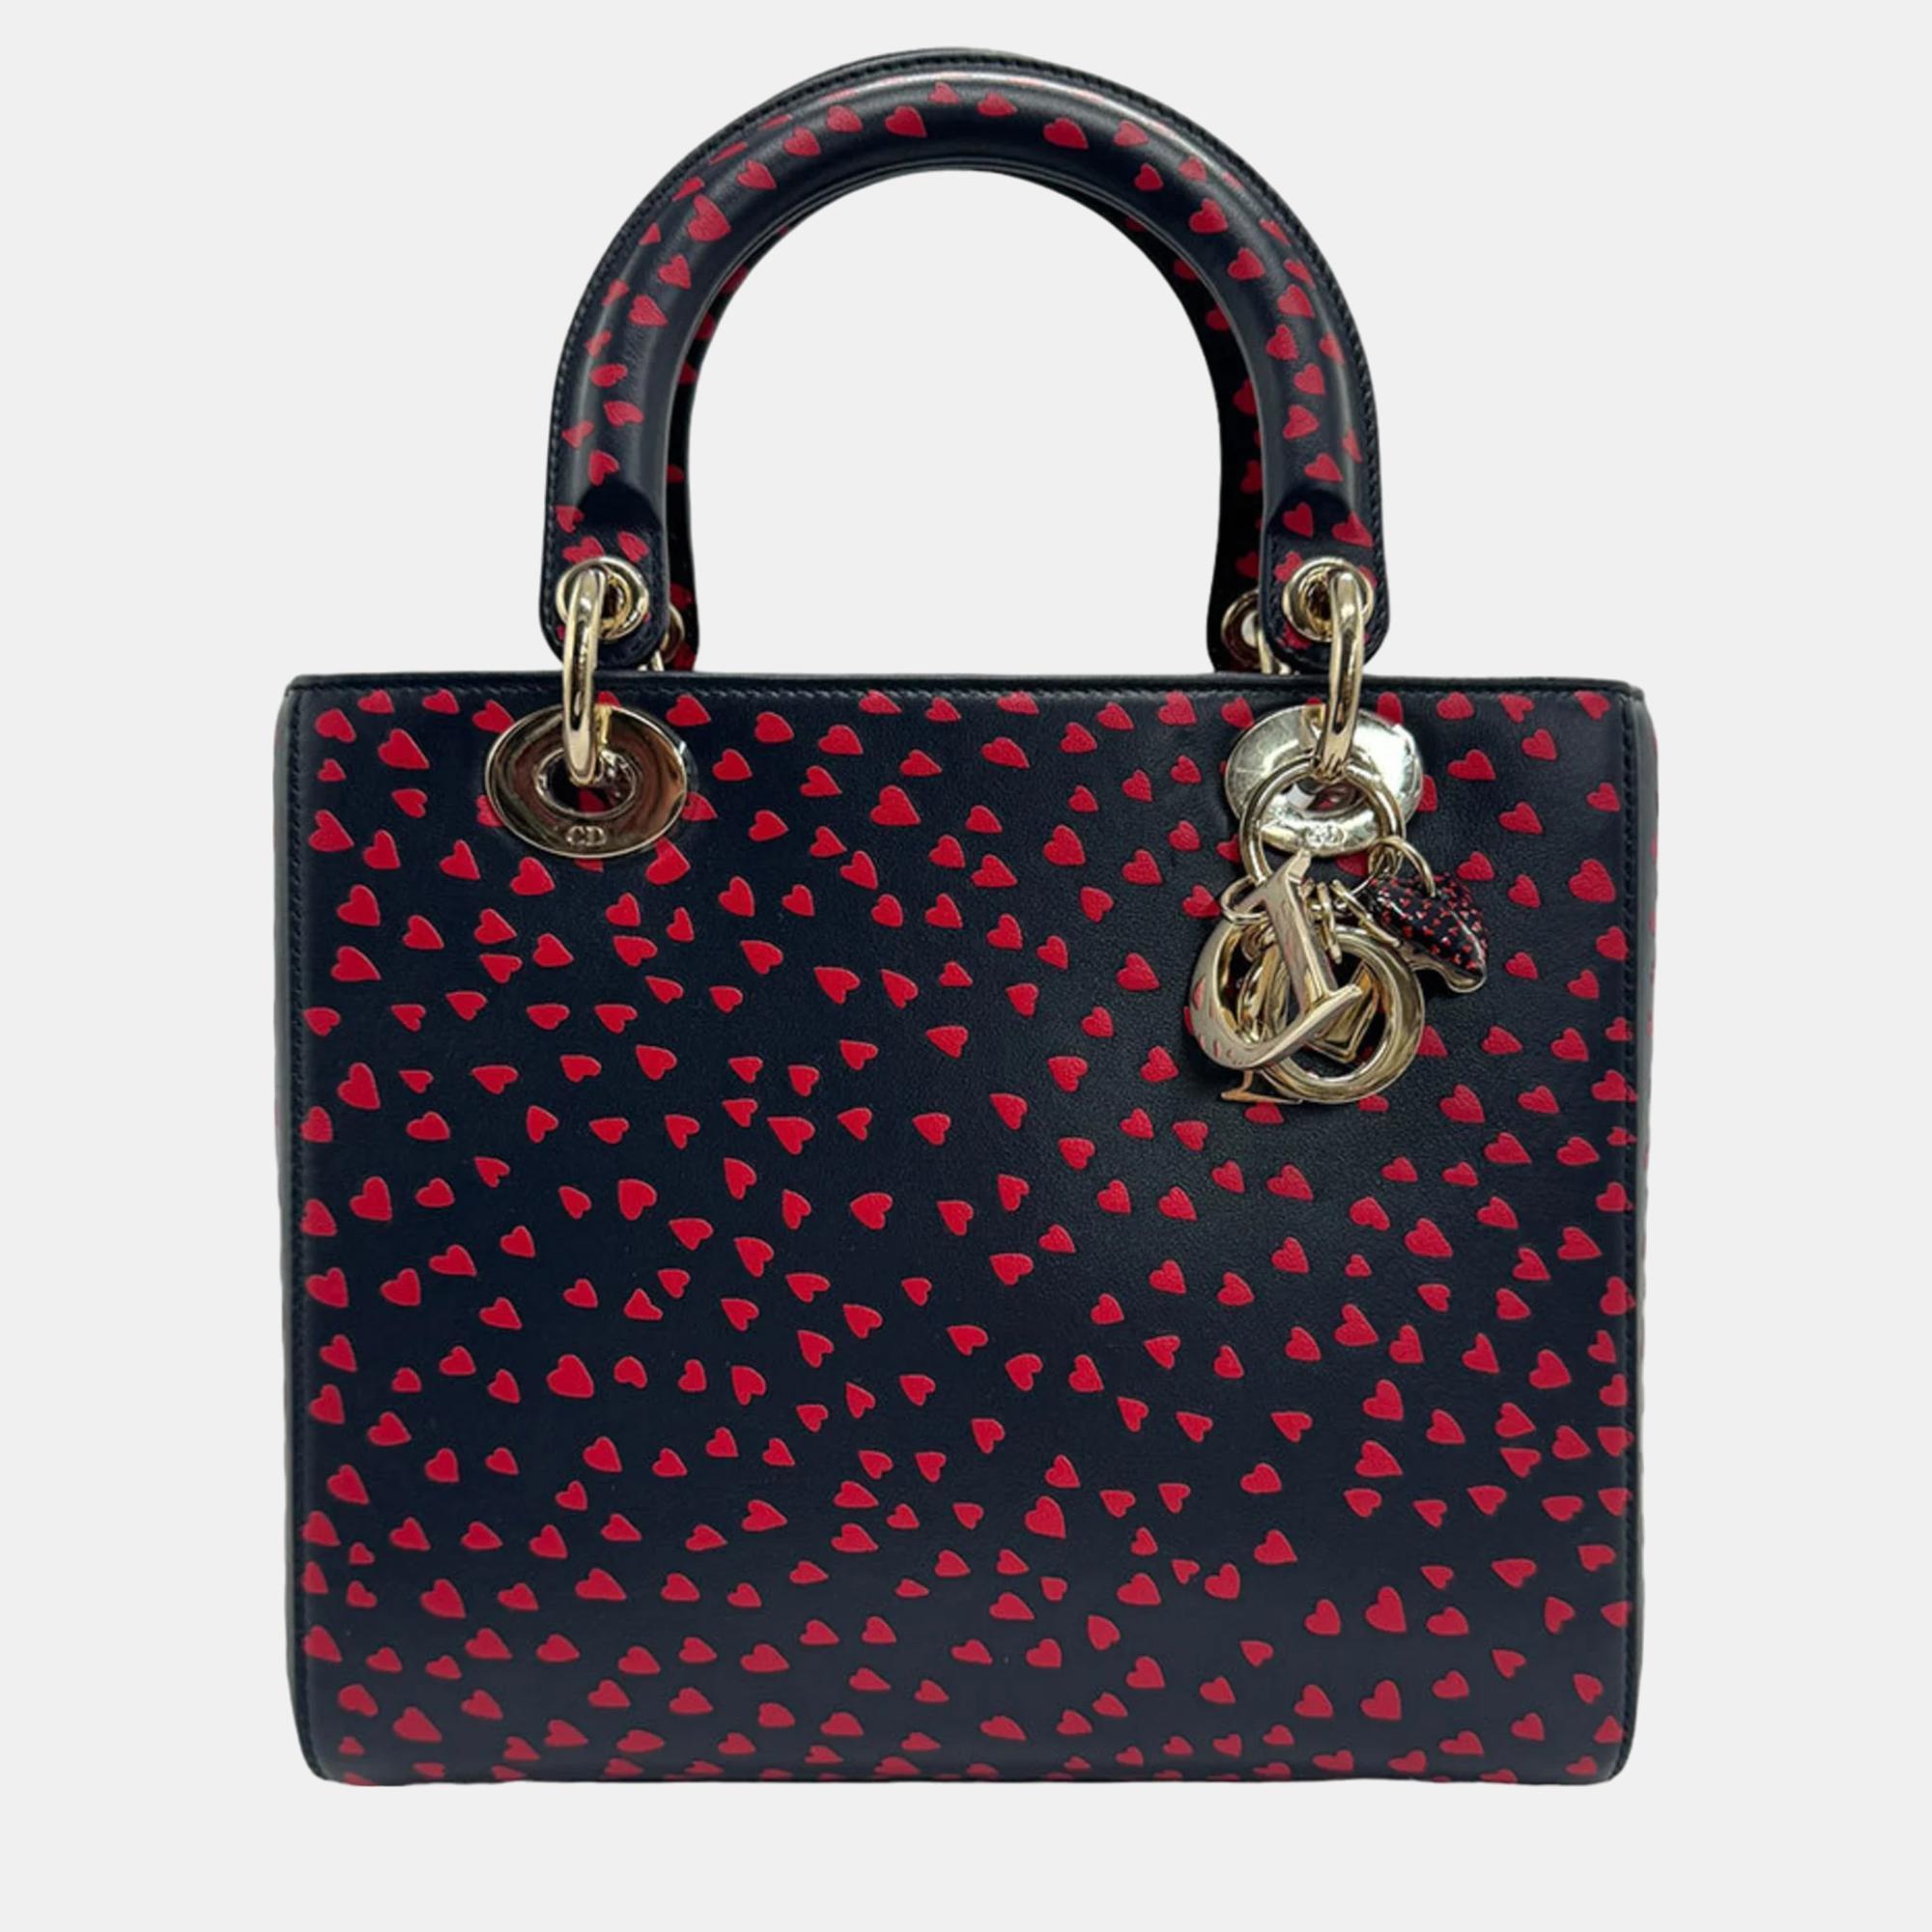 Dior black/red leather medium i love paris lady dior tote bag